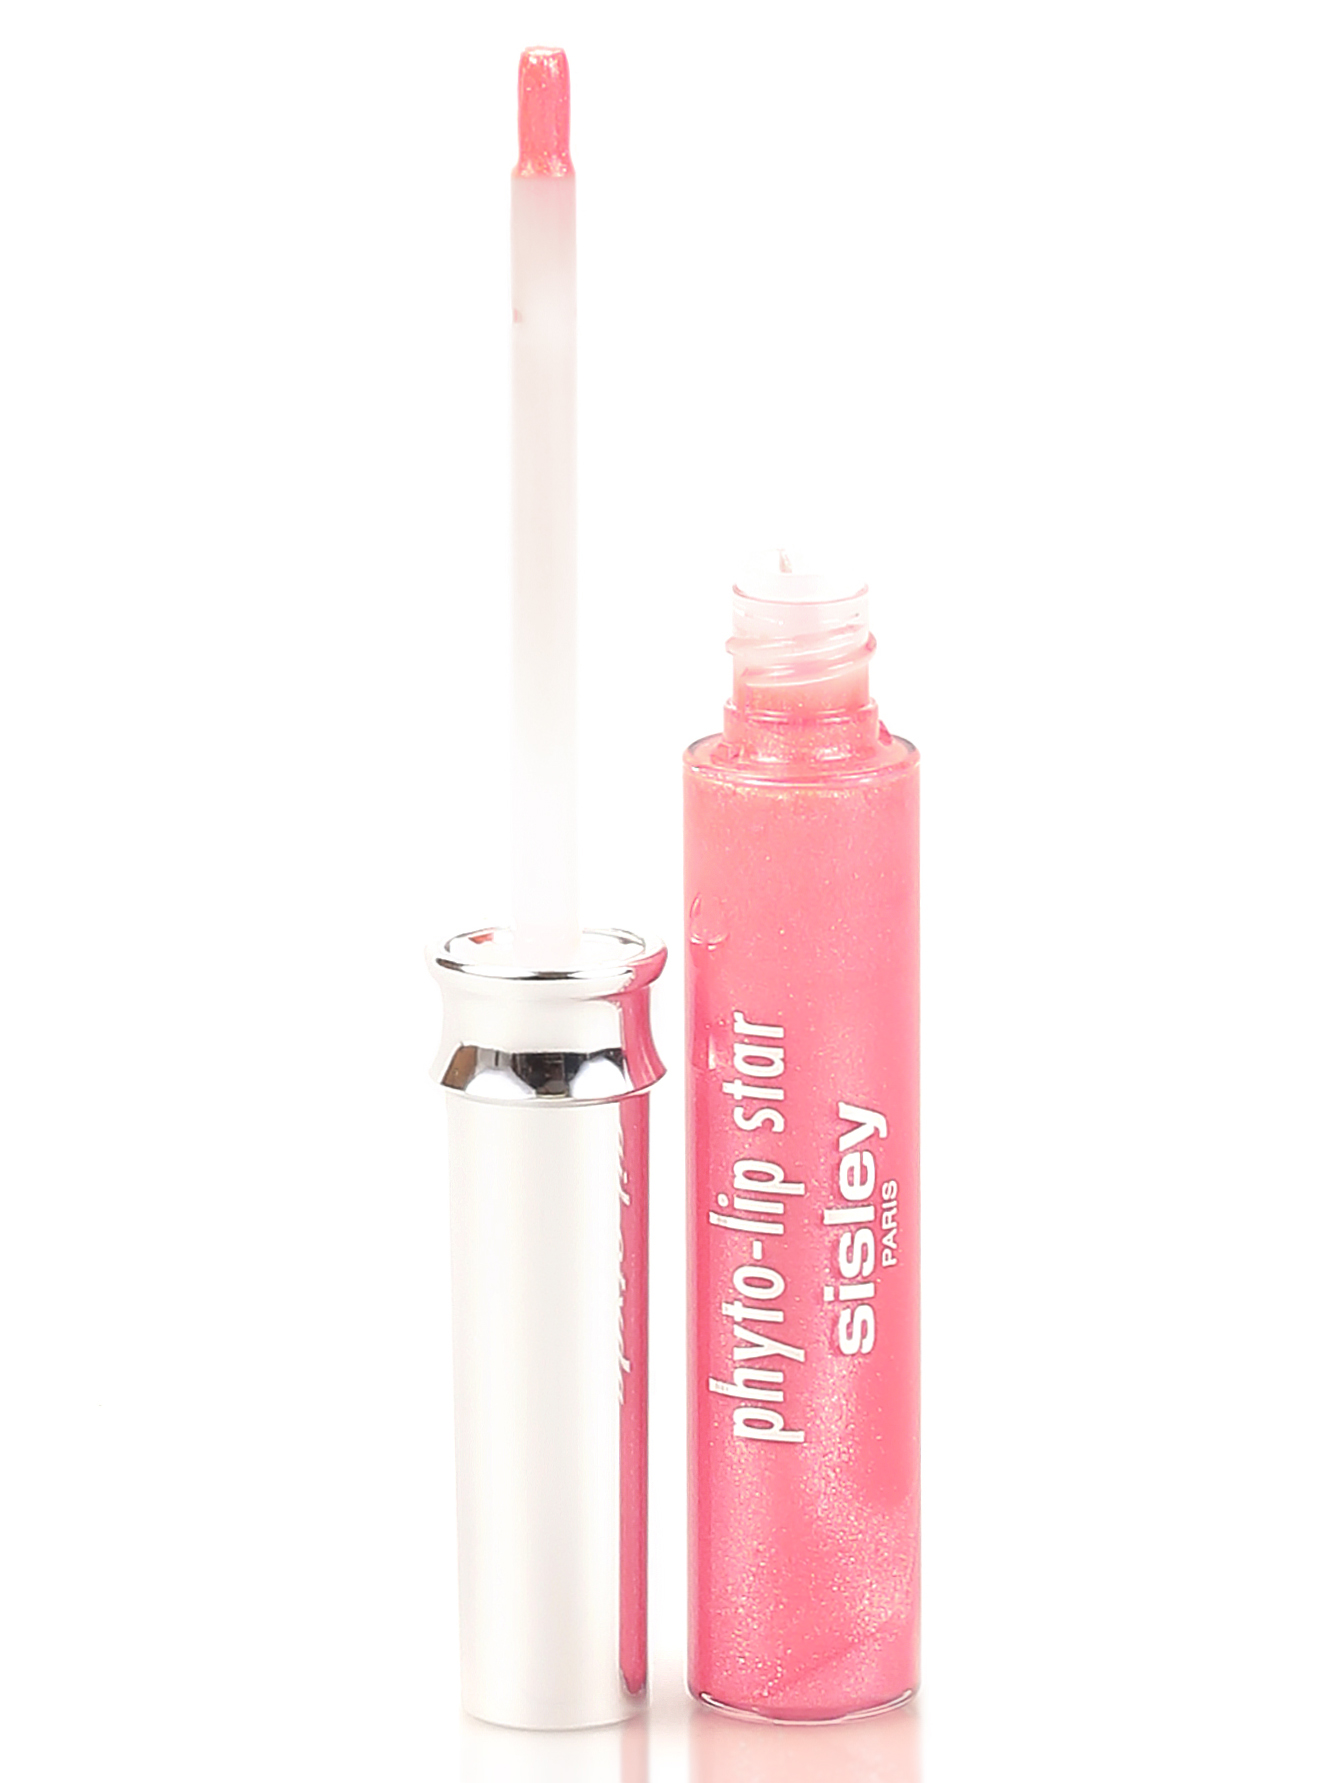 Блеск для губ - №2 Pink Sapphire, Phyto lip Star - Модель Верх-Низ